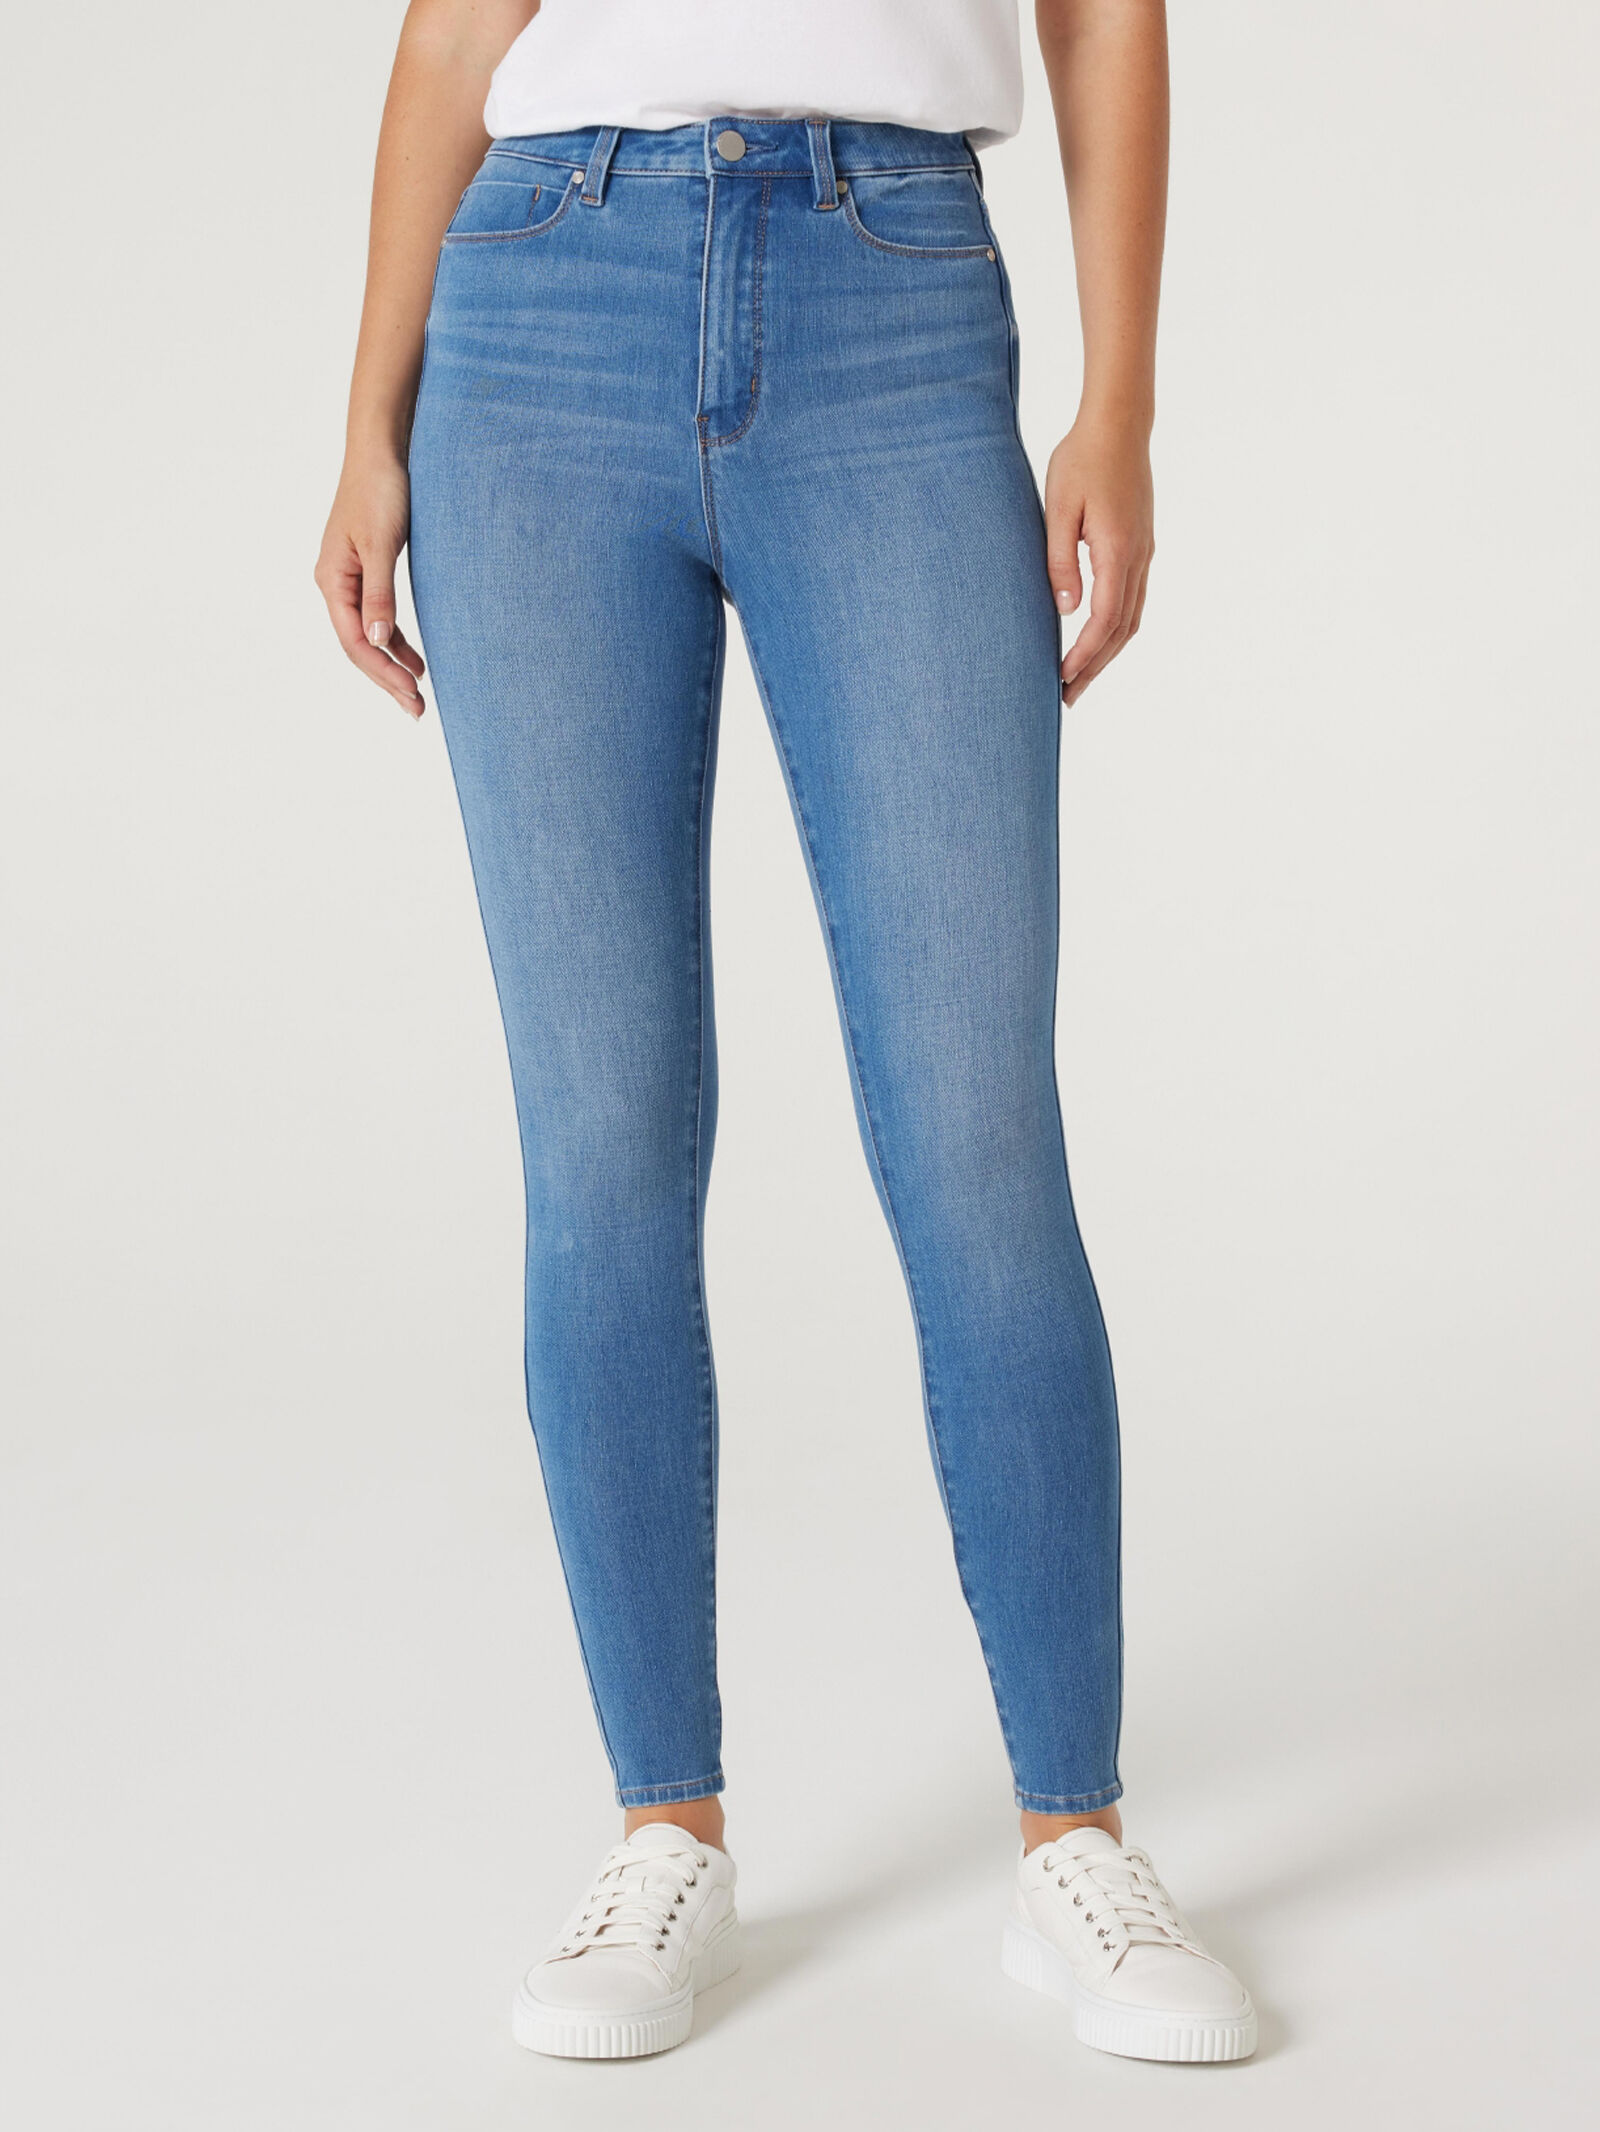 Buy Levi's 710 Light Indigo Super Skinny Jeans for Women's Online @ Tata  CLiQ